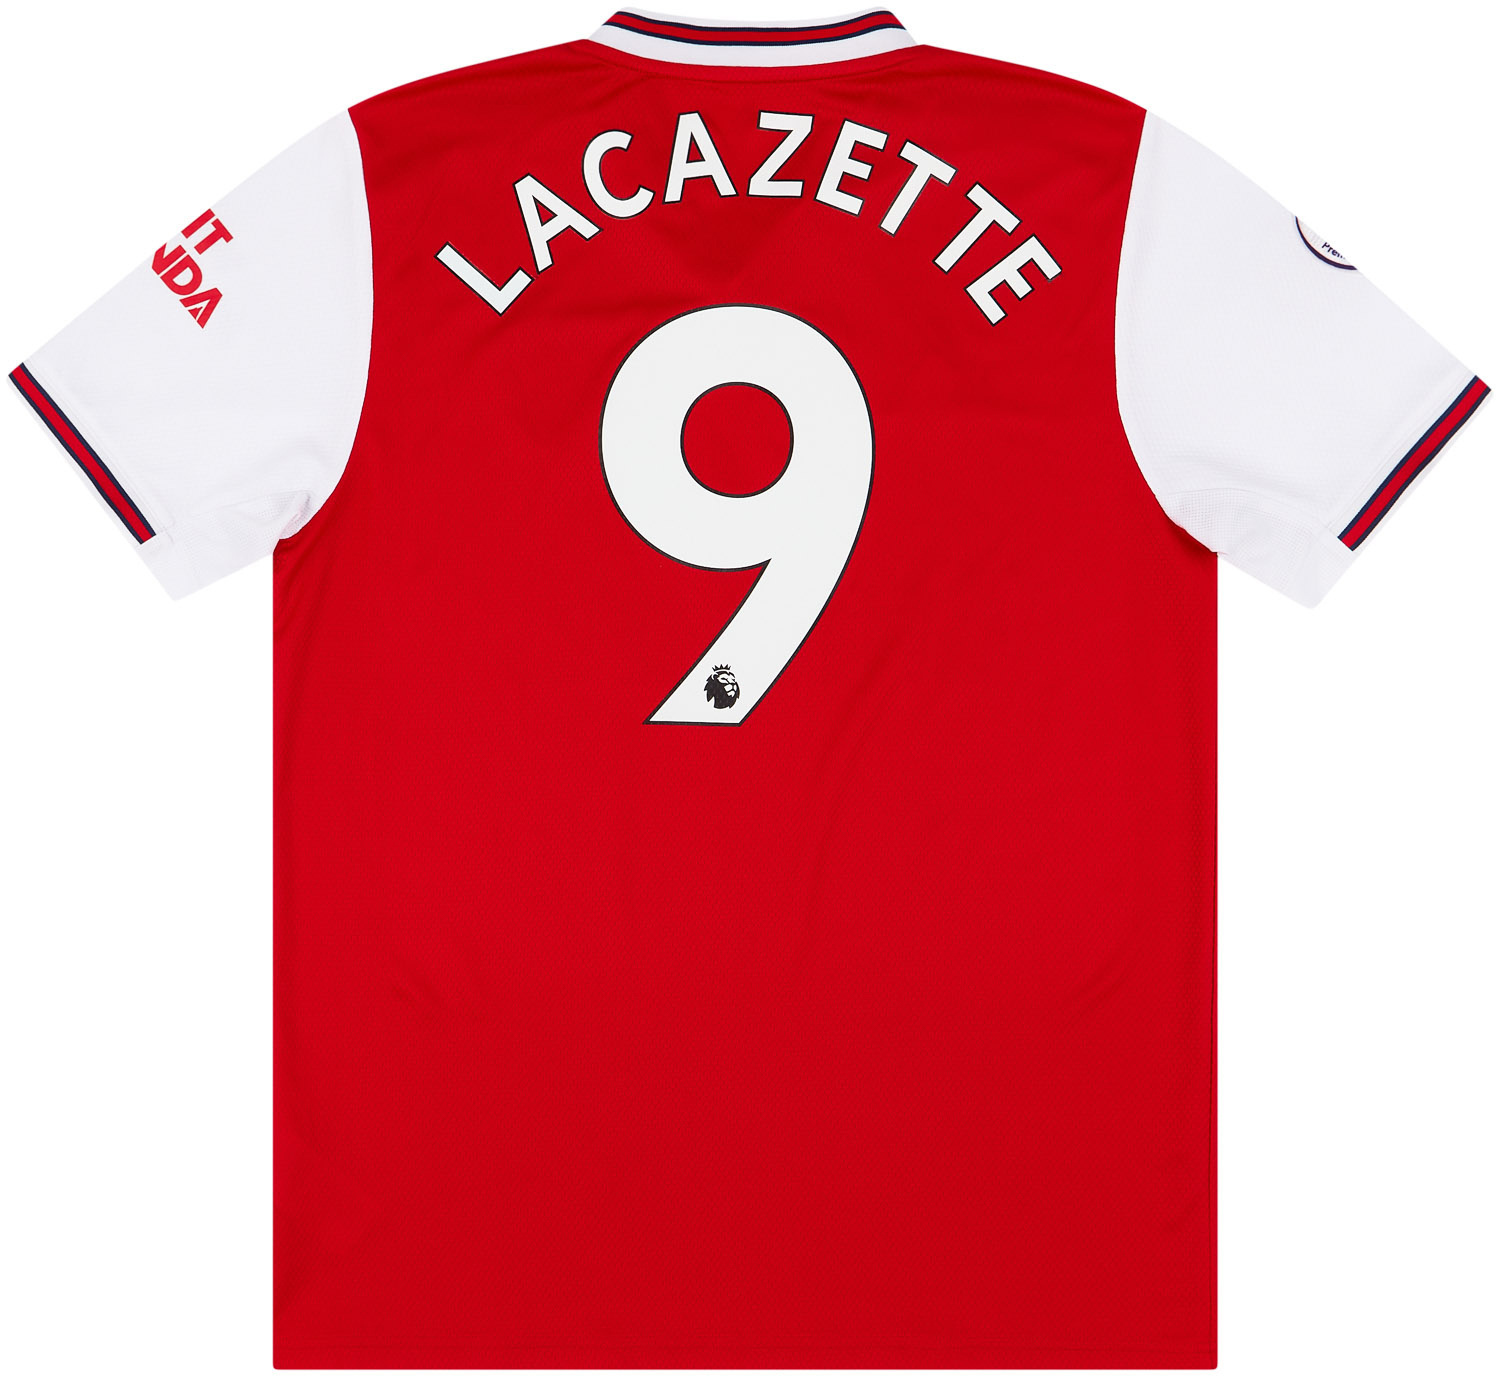 New Arsenal away kit 2019/20: Alexandre Lacazette and Jordan Nobbs